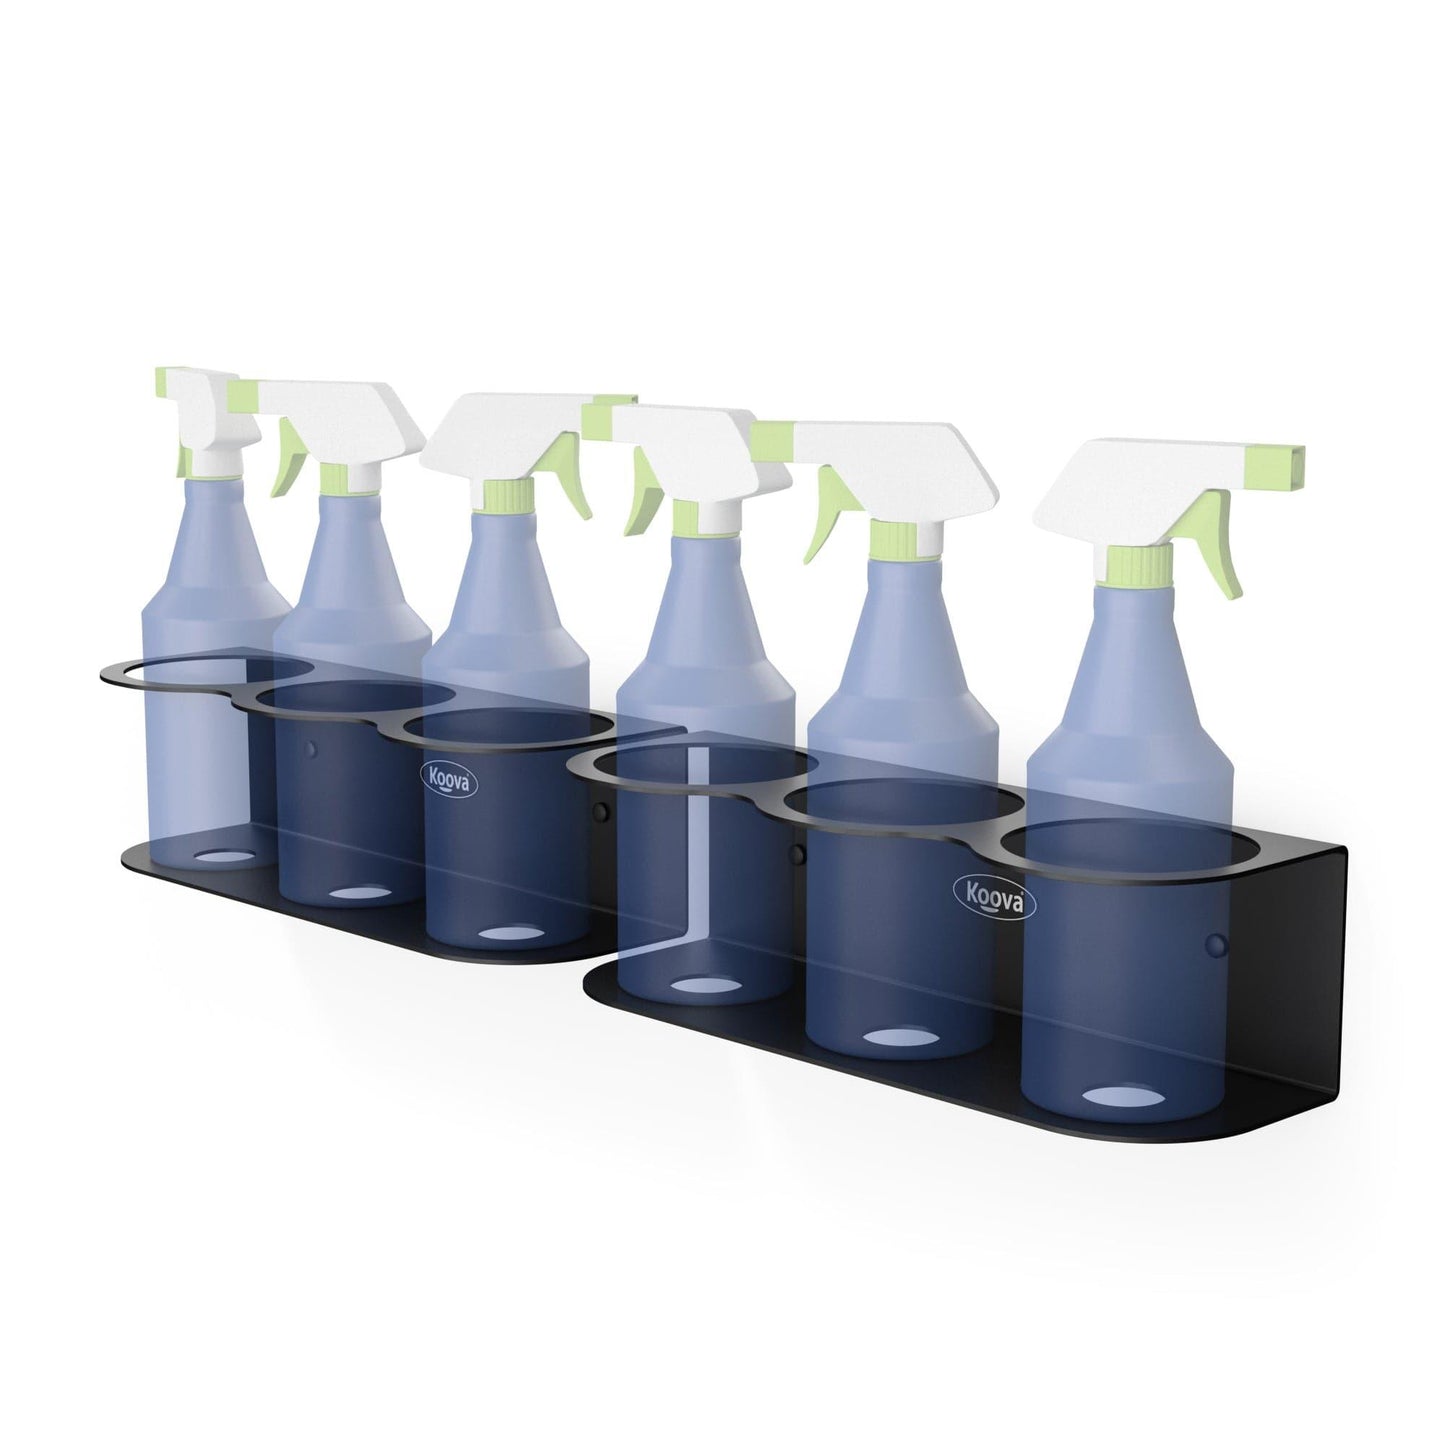 Six Spray Bottle Holder - Koova